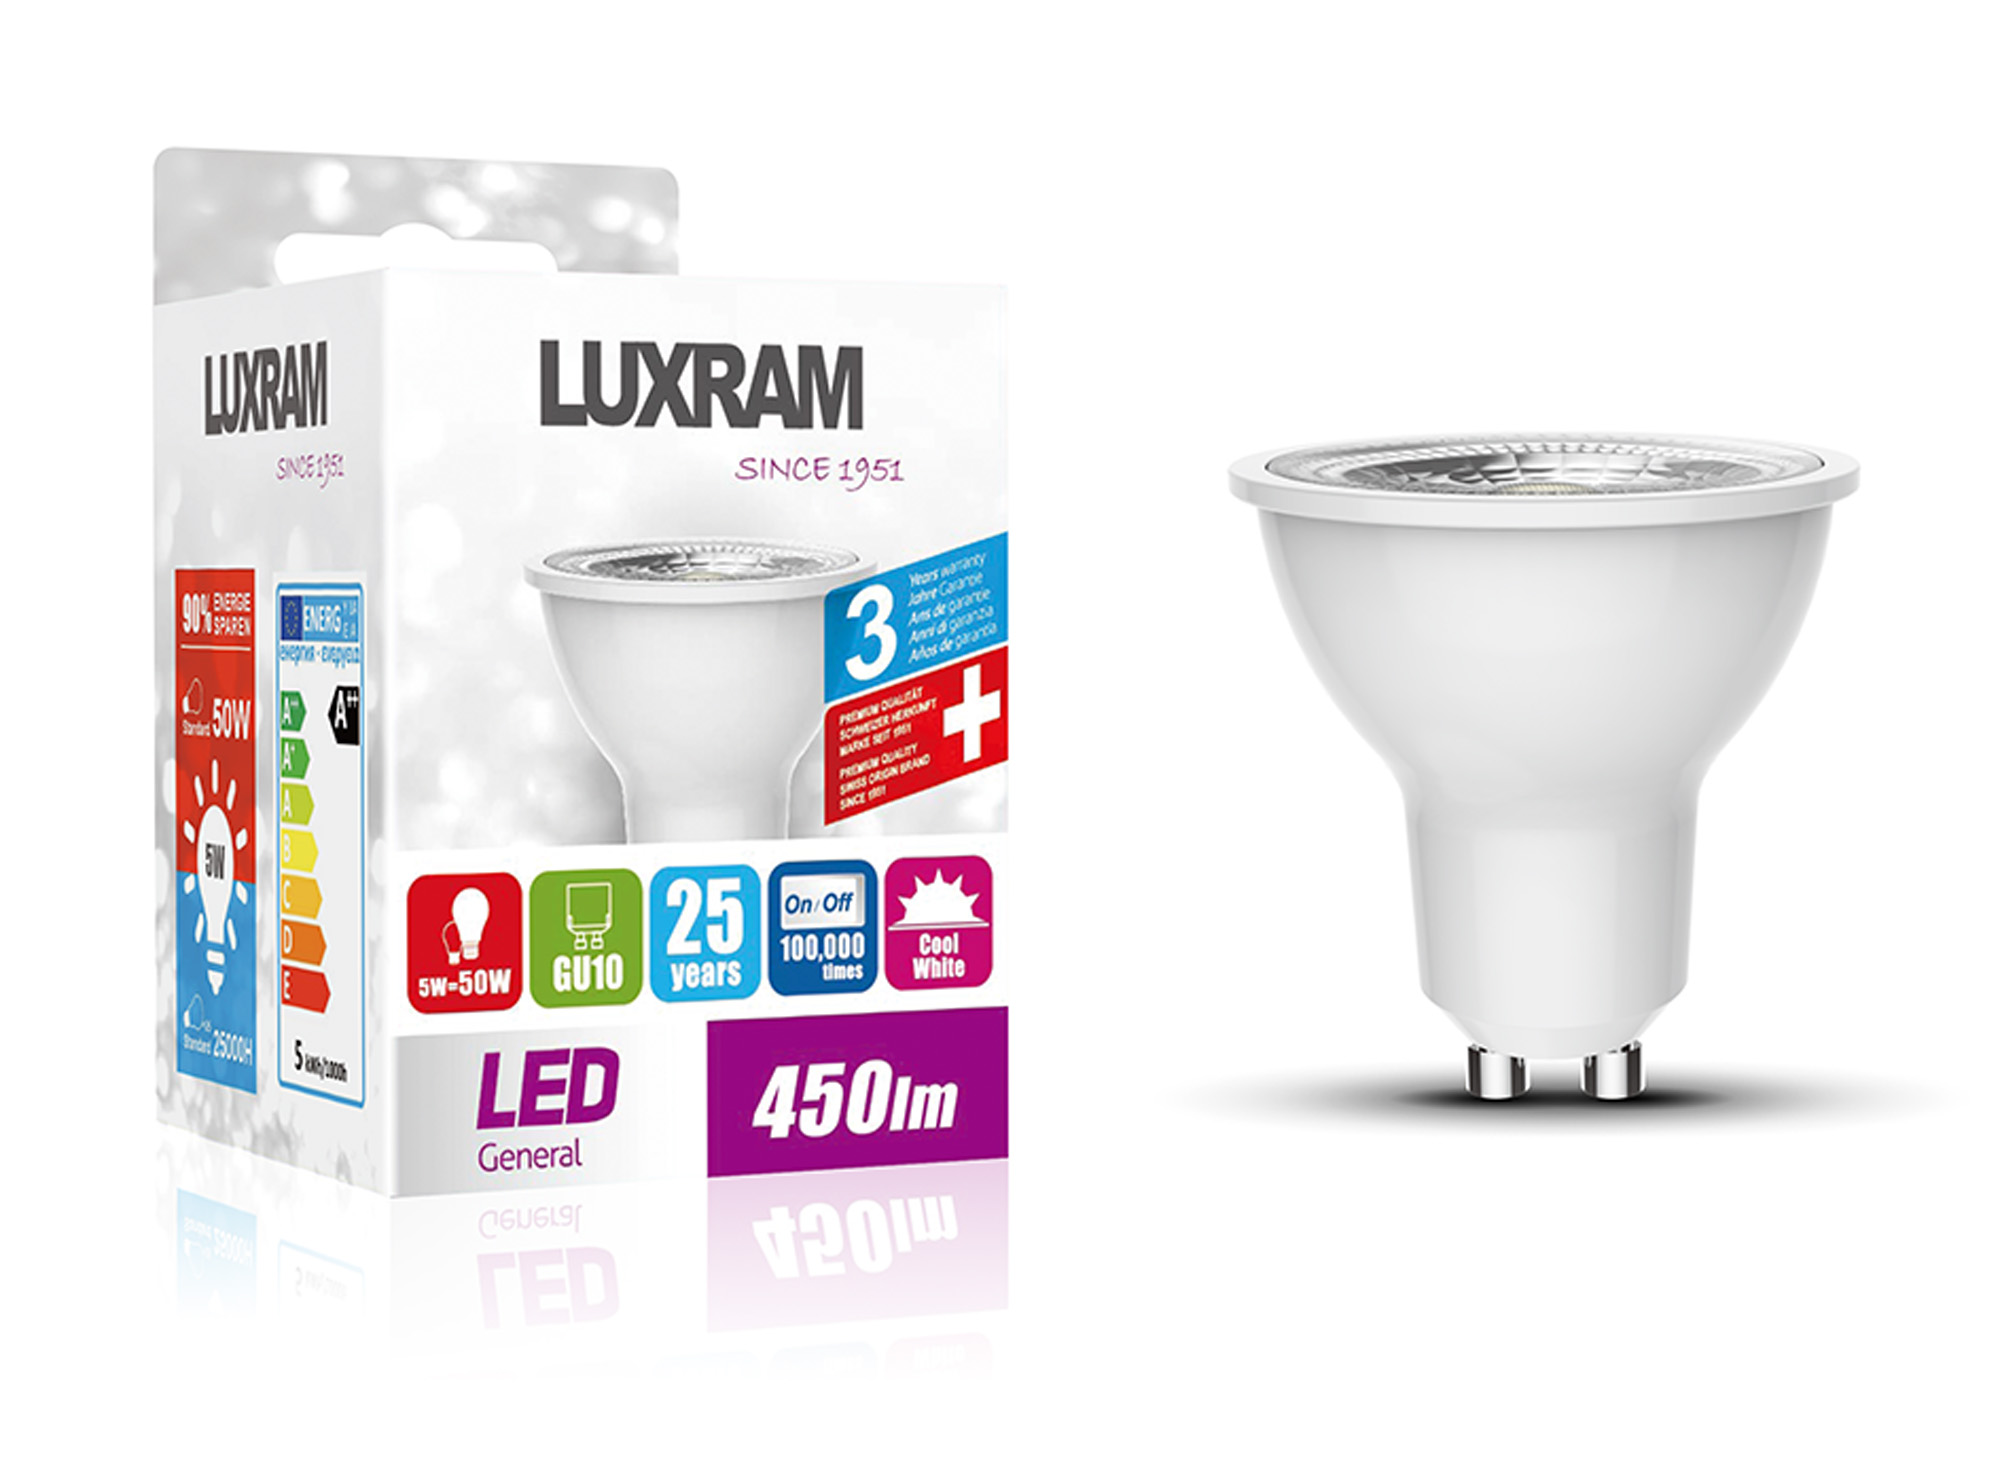 HE Duramax LED Lamps Luxram Spot Lamps